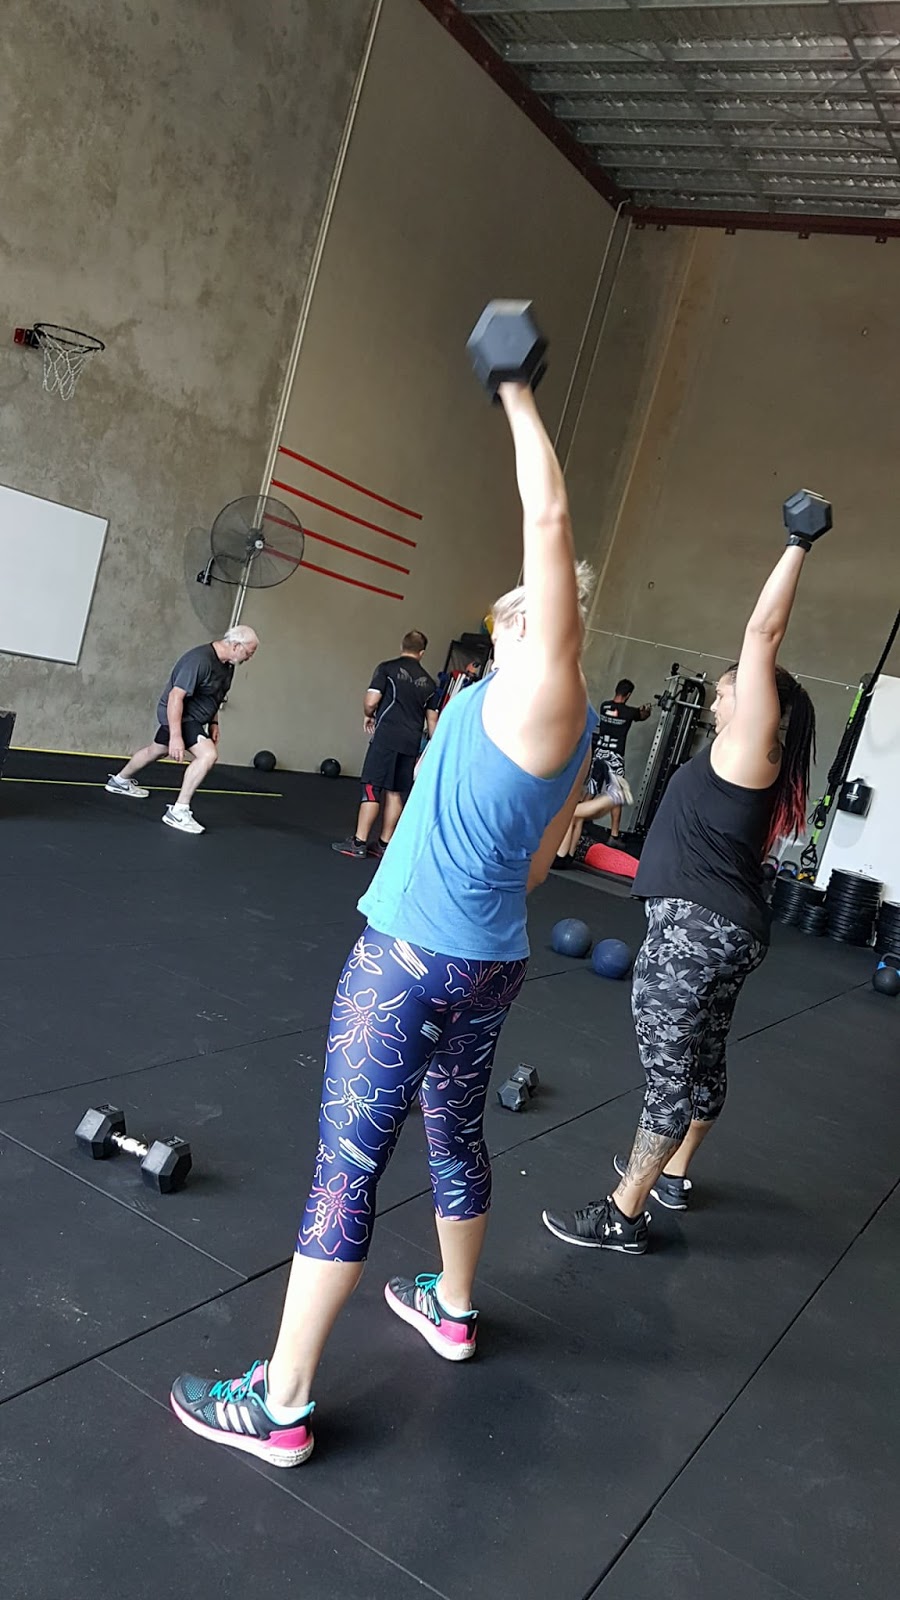 Booty and the Beast Fitness | gym | 59 Johanna Blvd, Kensington QLD 4670, Australia | 0402027919 OR +61 402 027 919